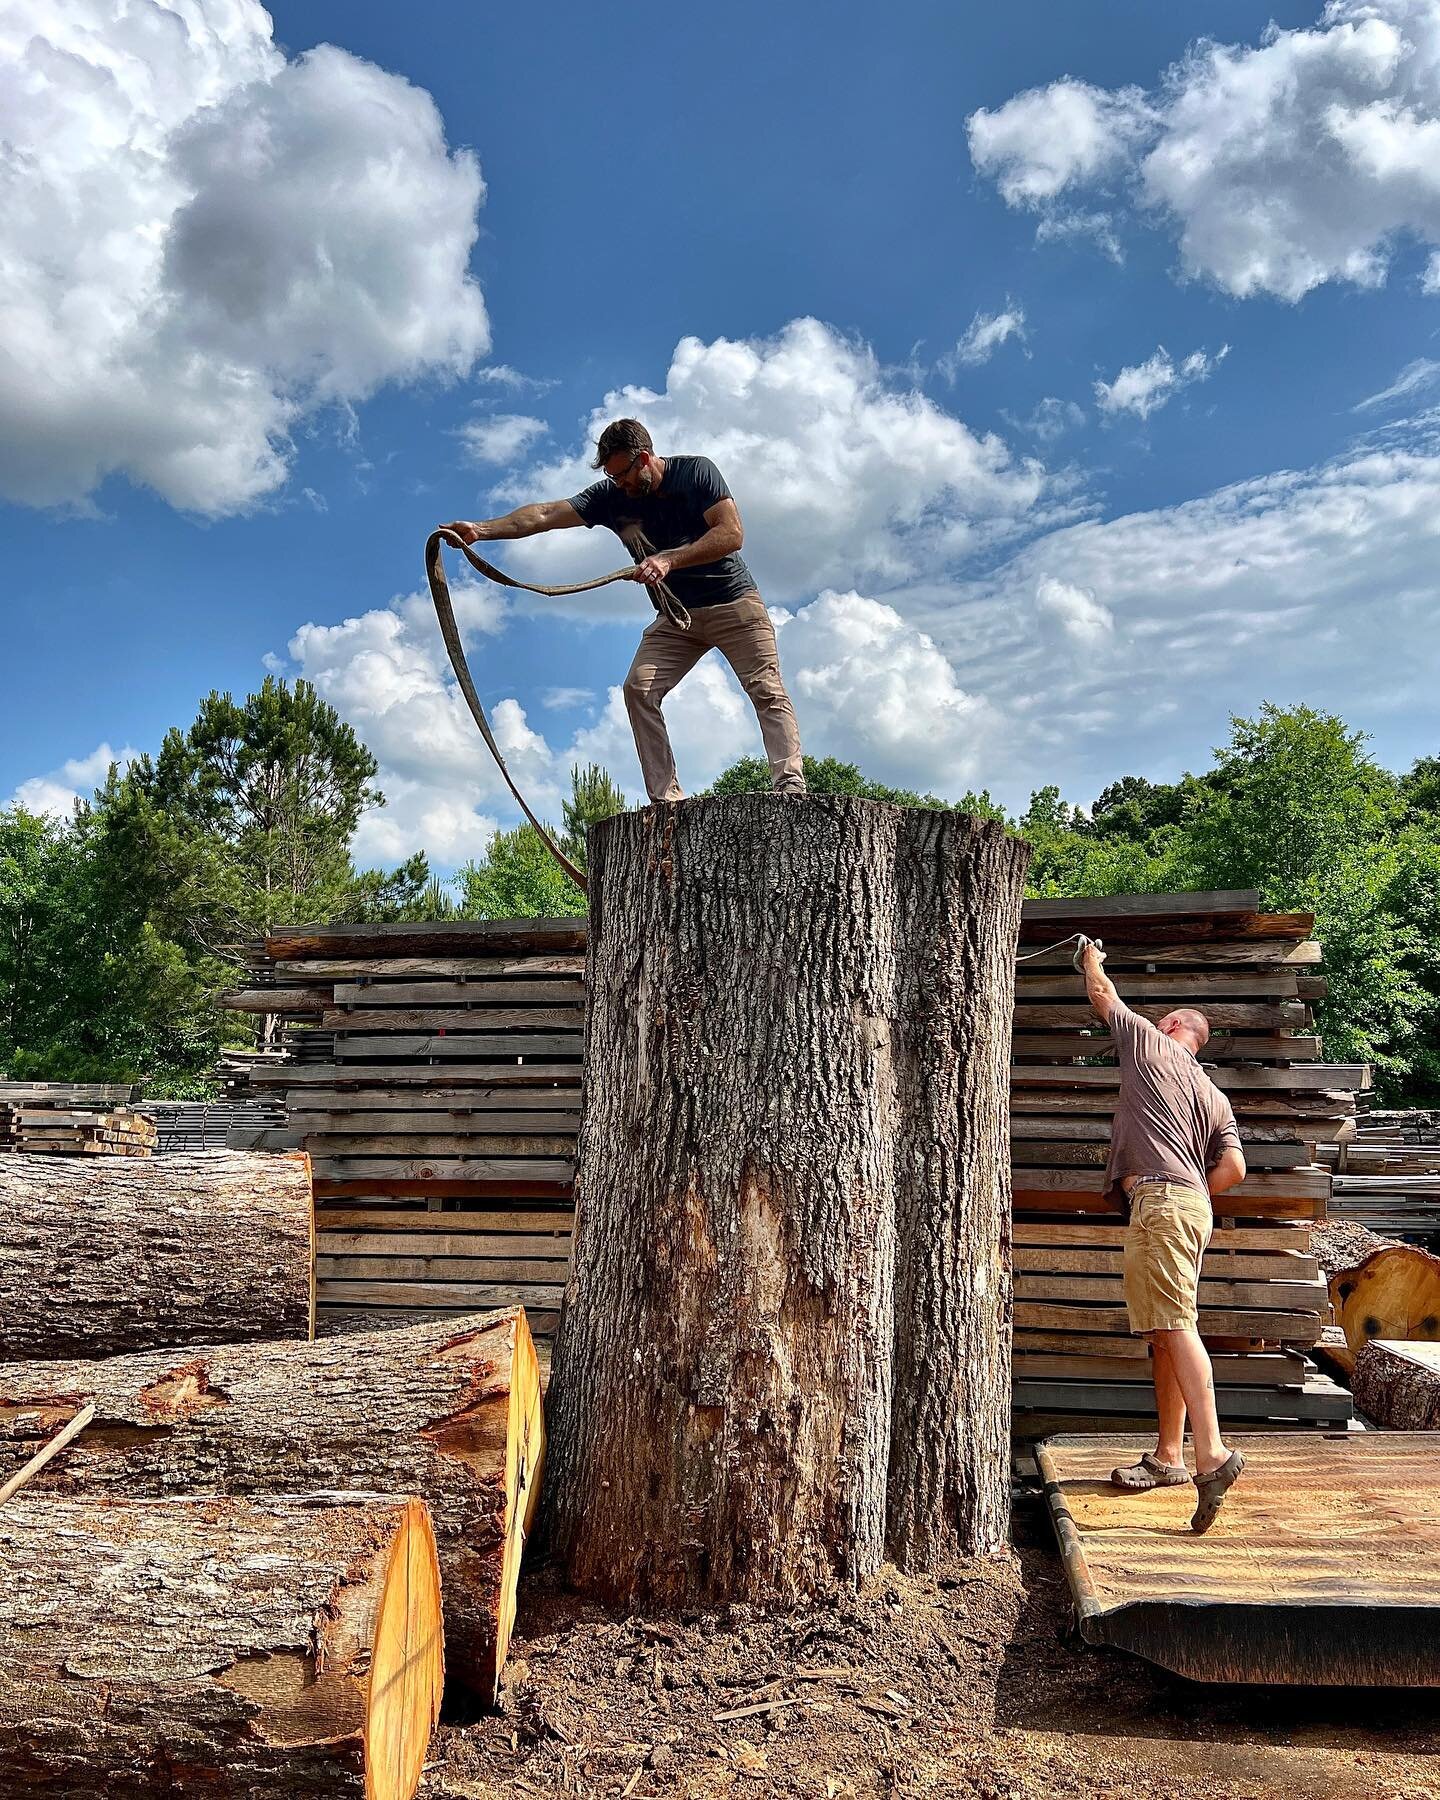 Wranglin&rsquo; a big willow log 🤠.
.
.
.
#forestfree #urbanwood #urbanlumber #urbanlogging #lumberyard #woodyard #sawmill #sawmillbusiness #sawyer #logstolumber #logs #woodisgood #biglogs #sustainablewood #localwood